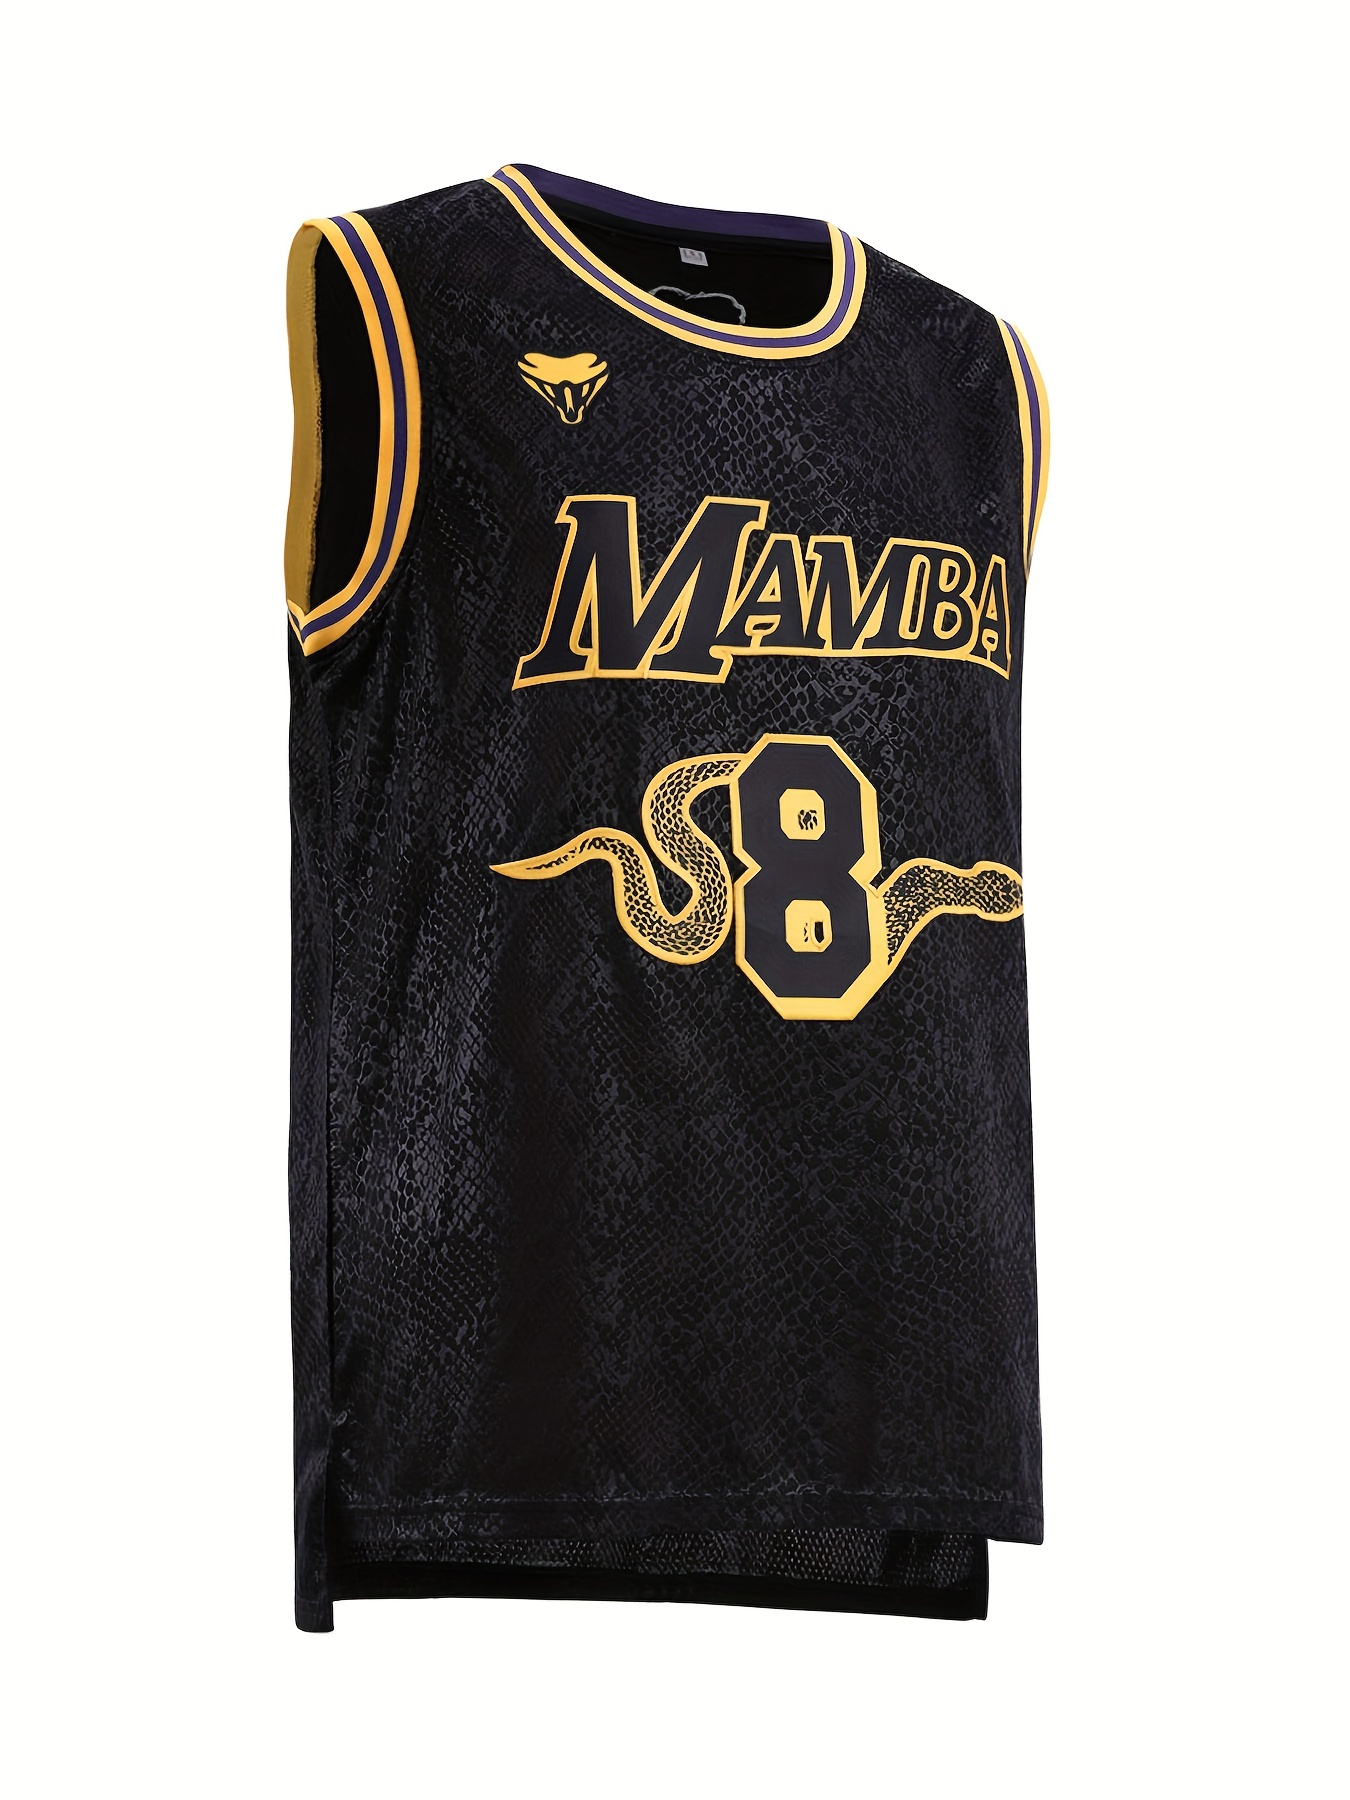 New Kobe Bryant Jersey #8 Black Mamba 44  Tank shirt, Tank top shirt,  Clothes design